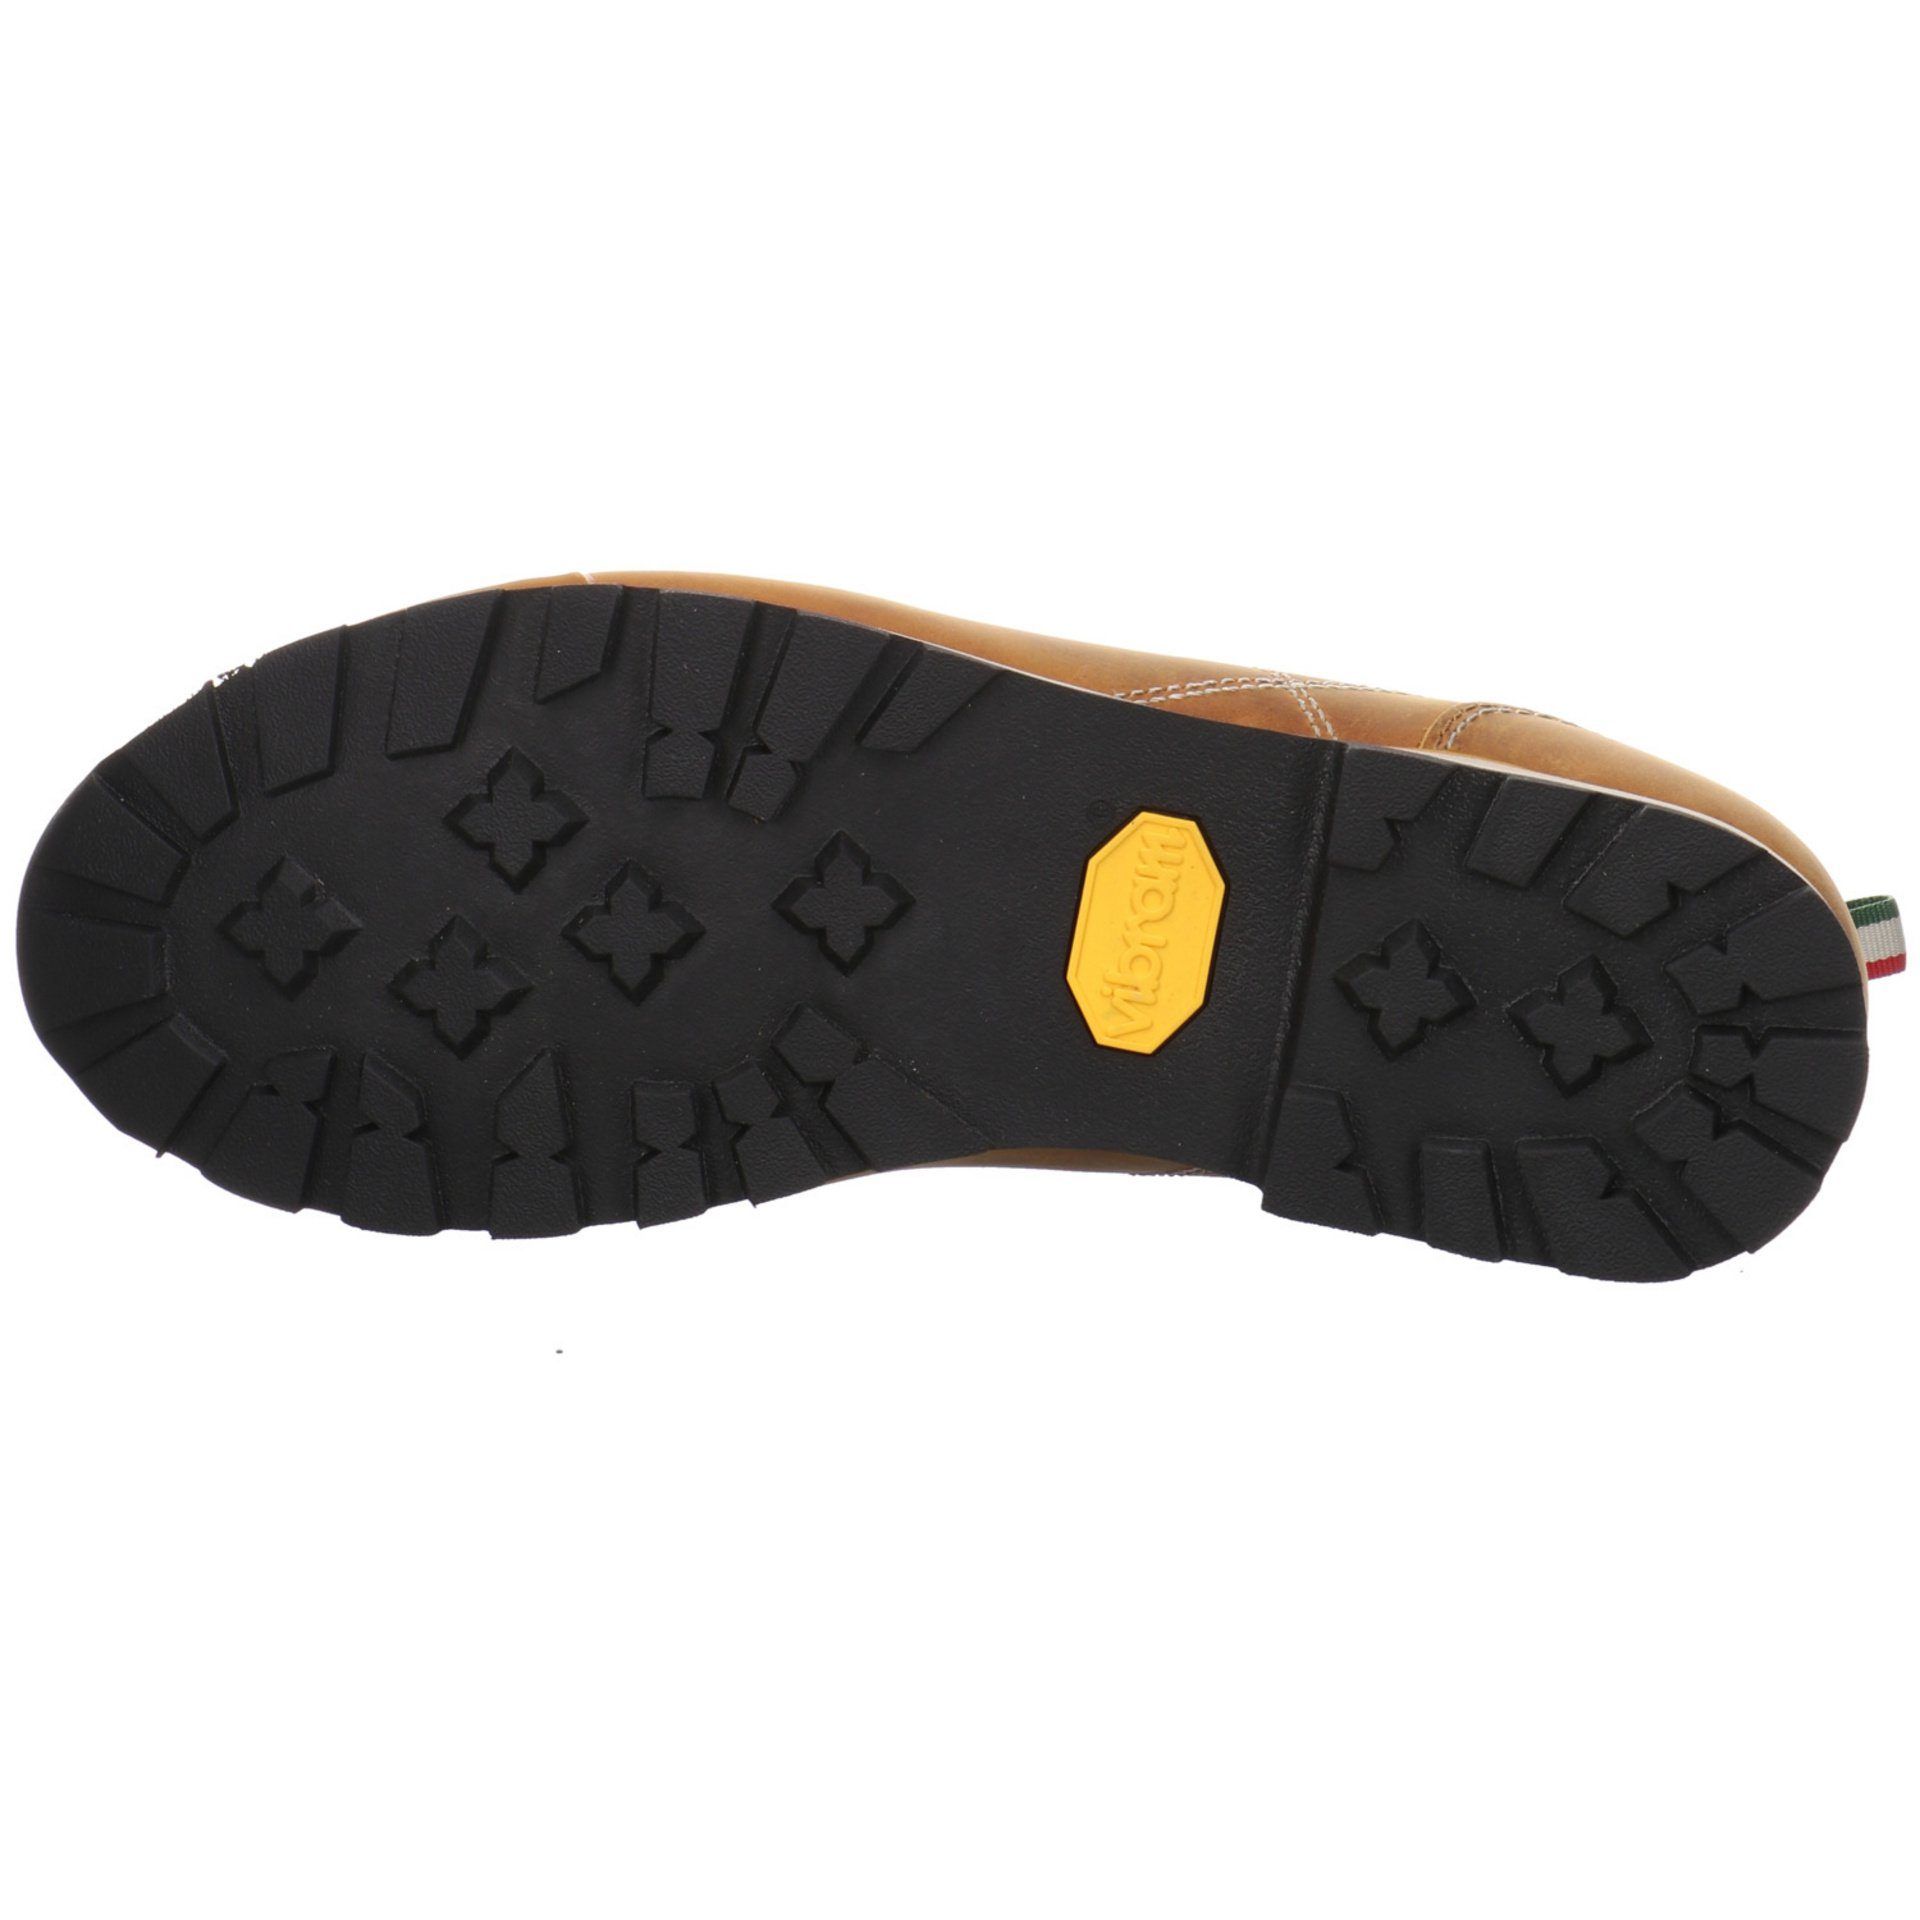 Dolomite Herren Outdoor Schuhe 54 FG Fettleder Outdoorschuh Mid Outdoorschuh Golden Yellow Evo